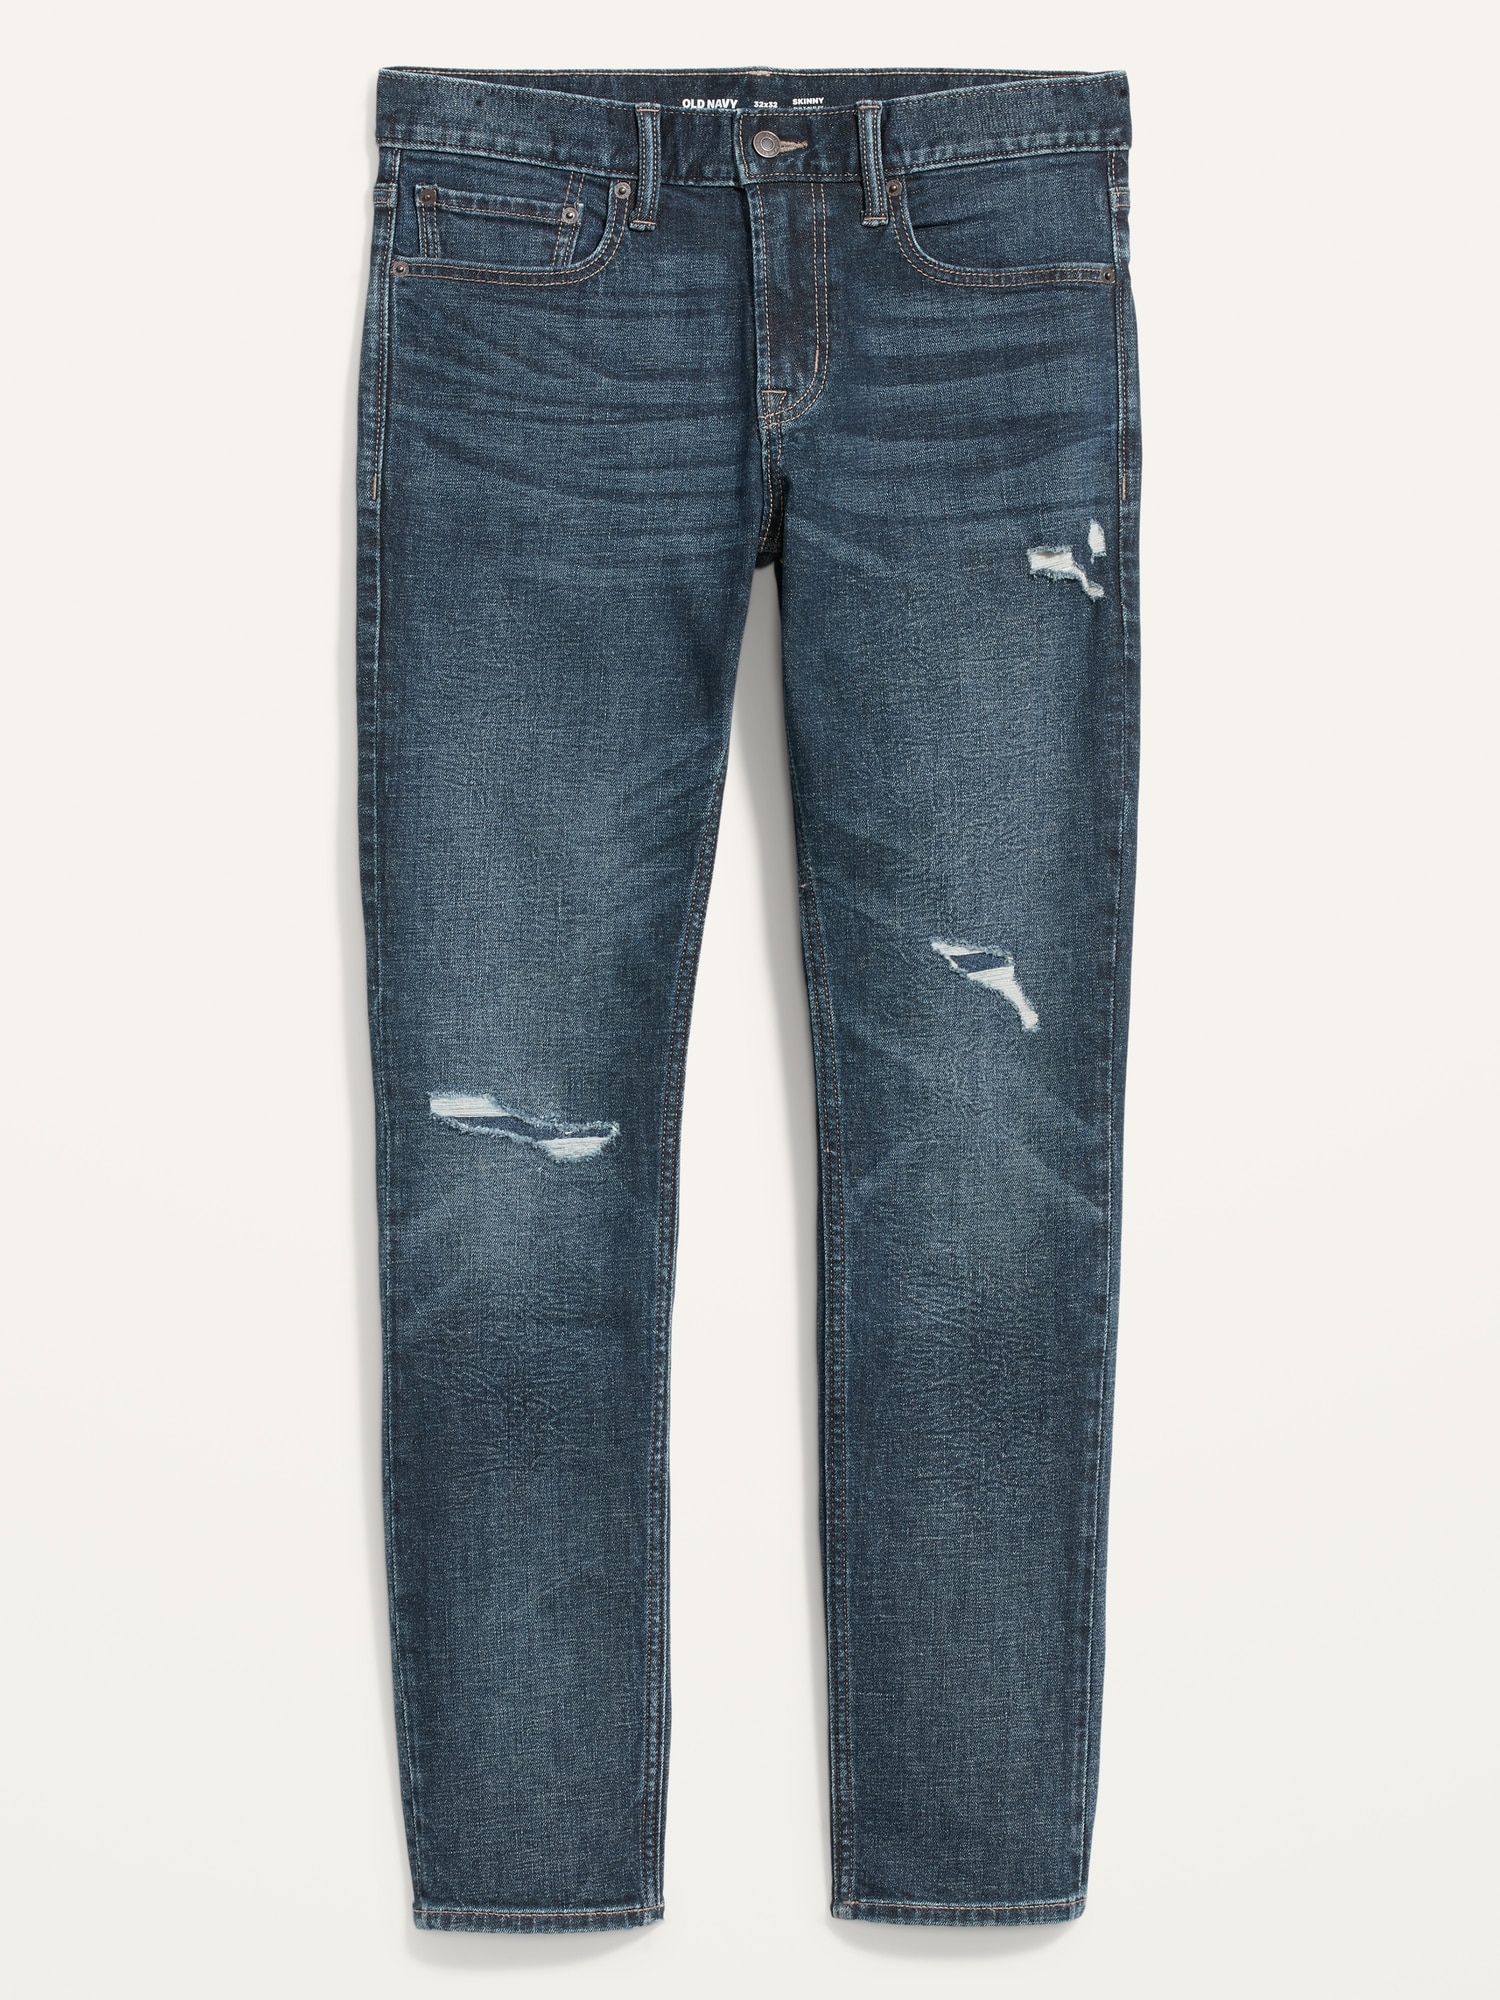 Skinny Built-In Flex Ripped Jeans for Men | Old Navy